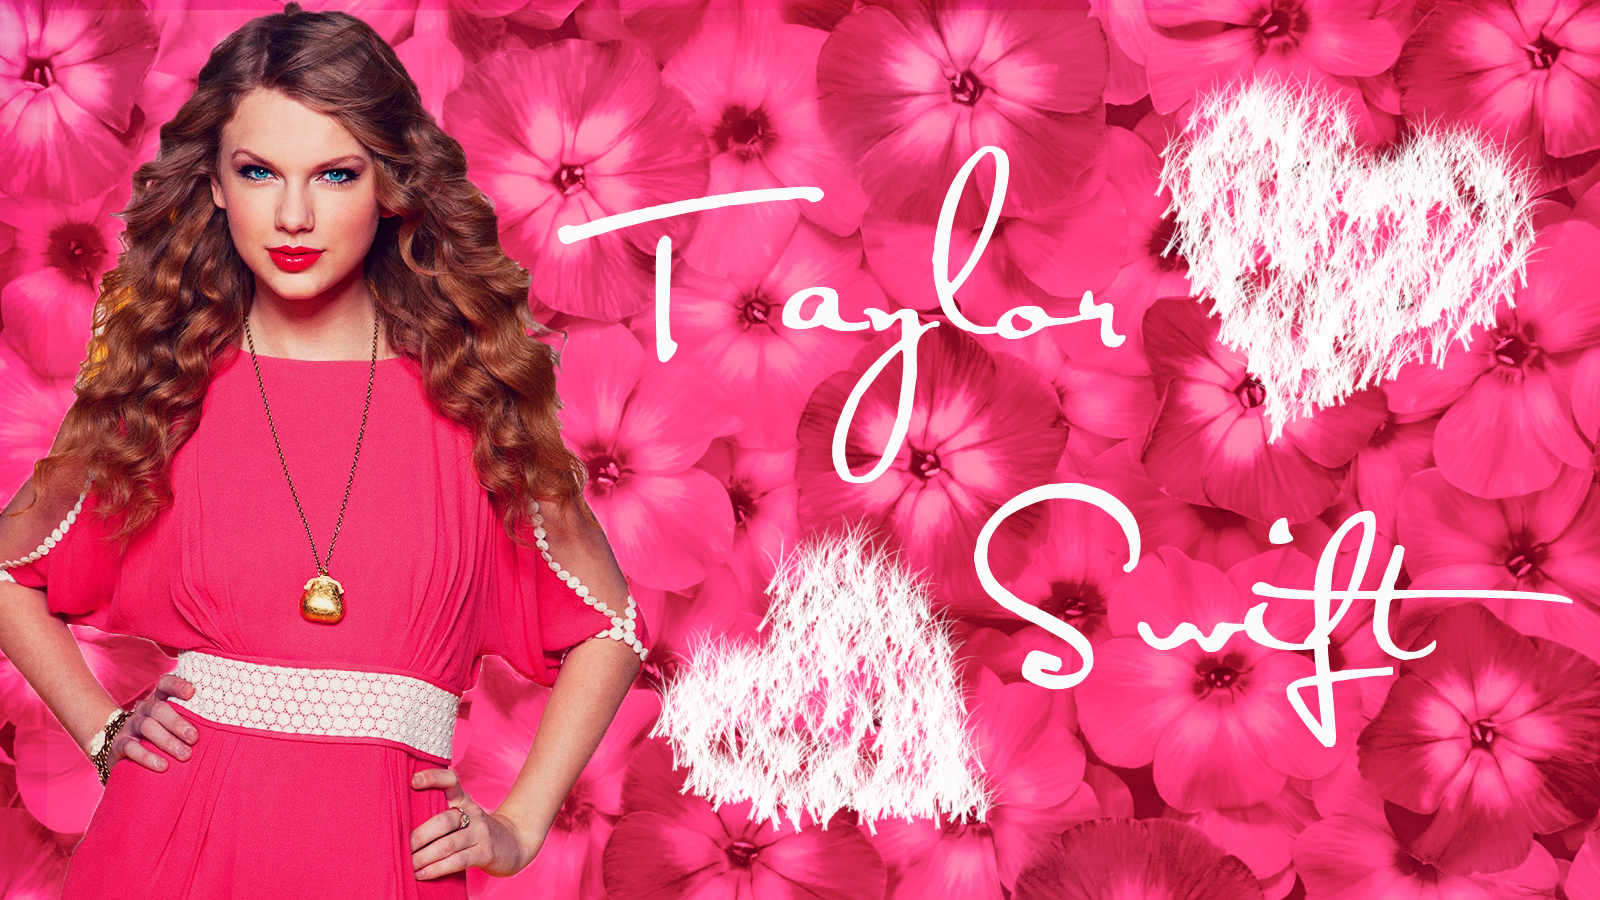 Taylor swift pink wallpaper by beautifullovelygirl on